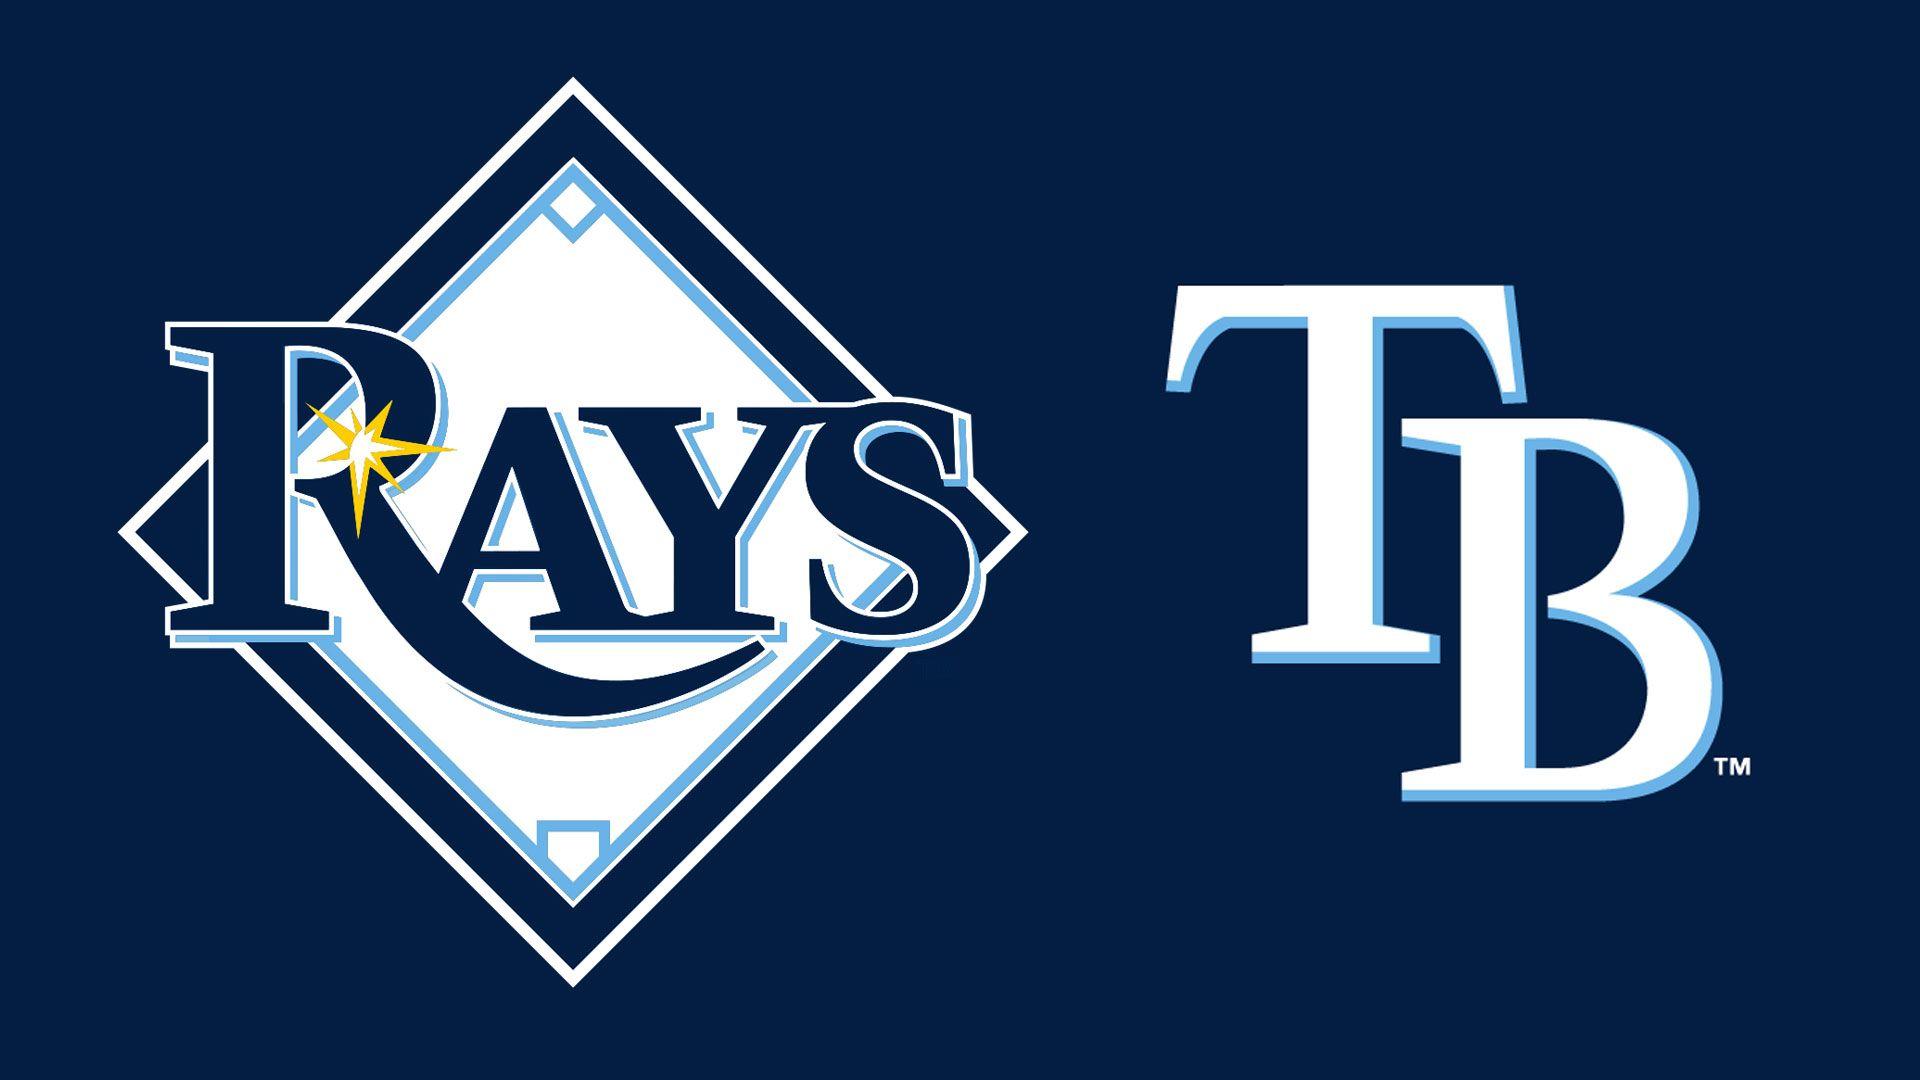 Tampa Bay Rays logo. HD MLB Baseball